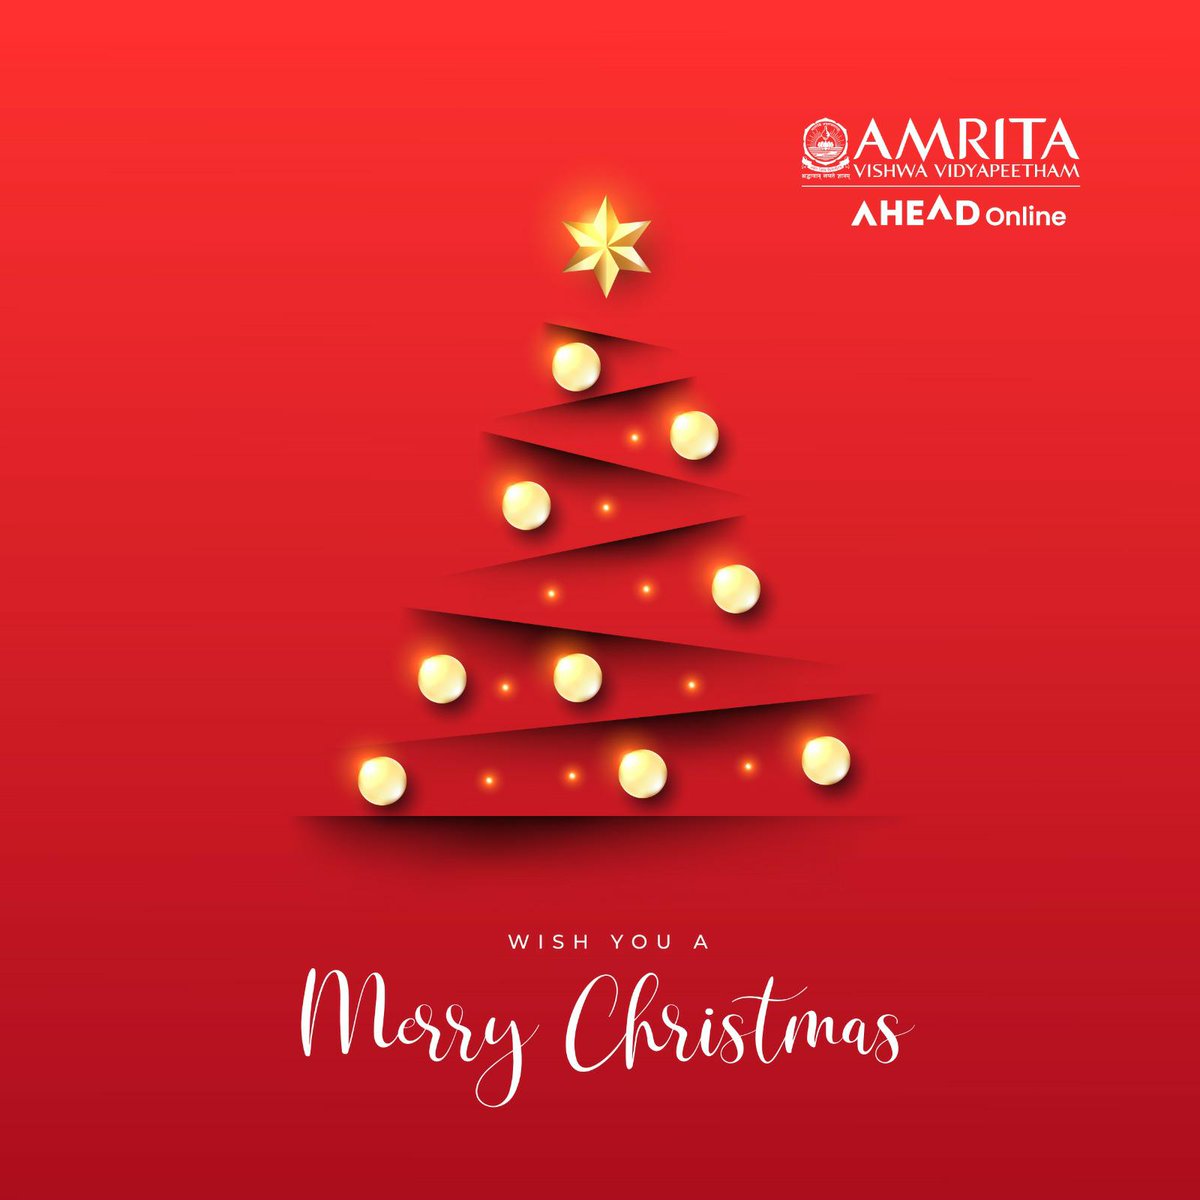 May the magic of Christmas bring you moments of peace and happiness. 🎄✨ #AmritaAHEAD #ChristmasCheer #JoyfulSeason'